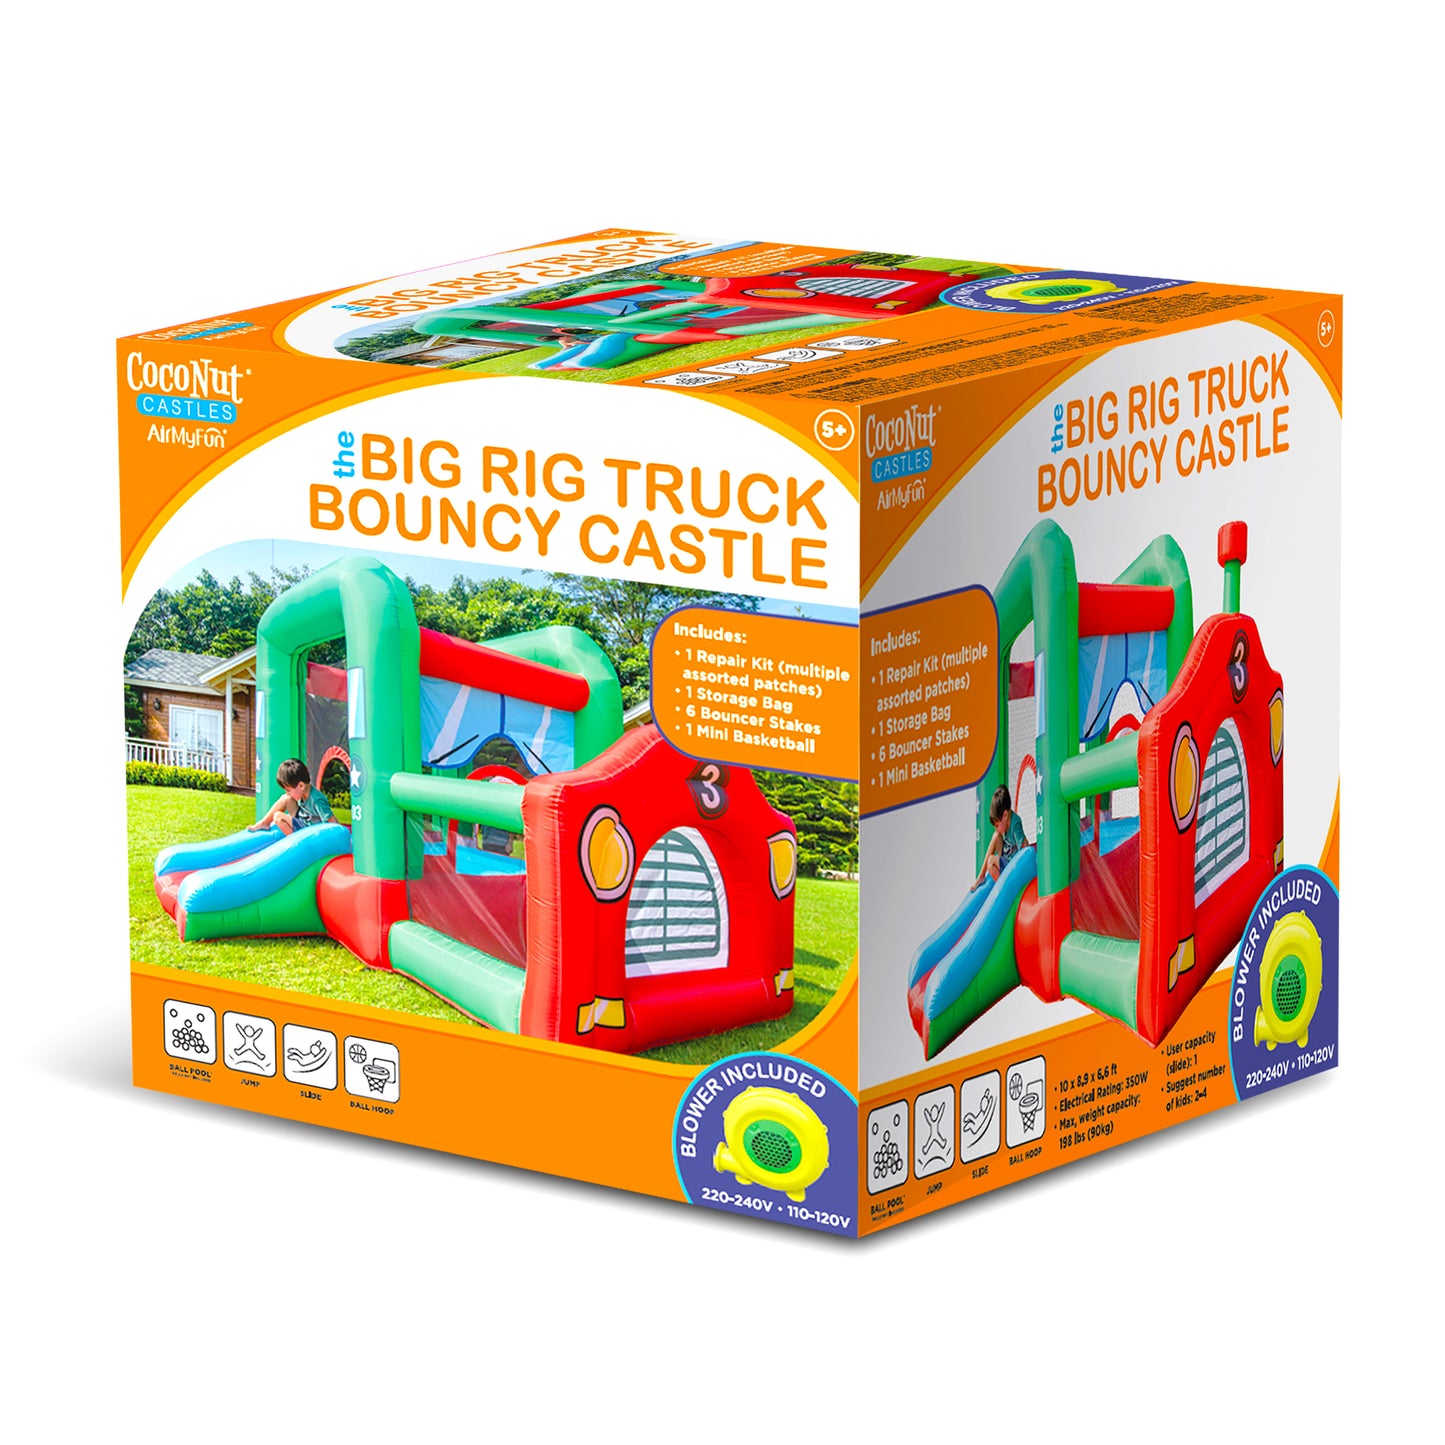 Big Rig Truck Bouncy Castle